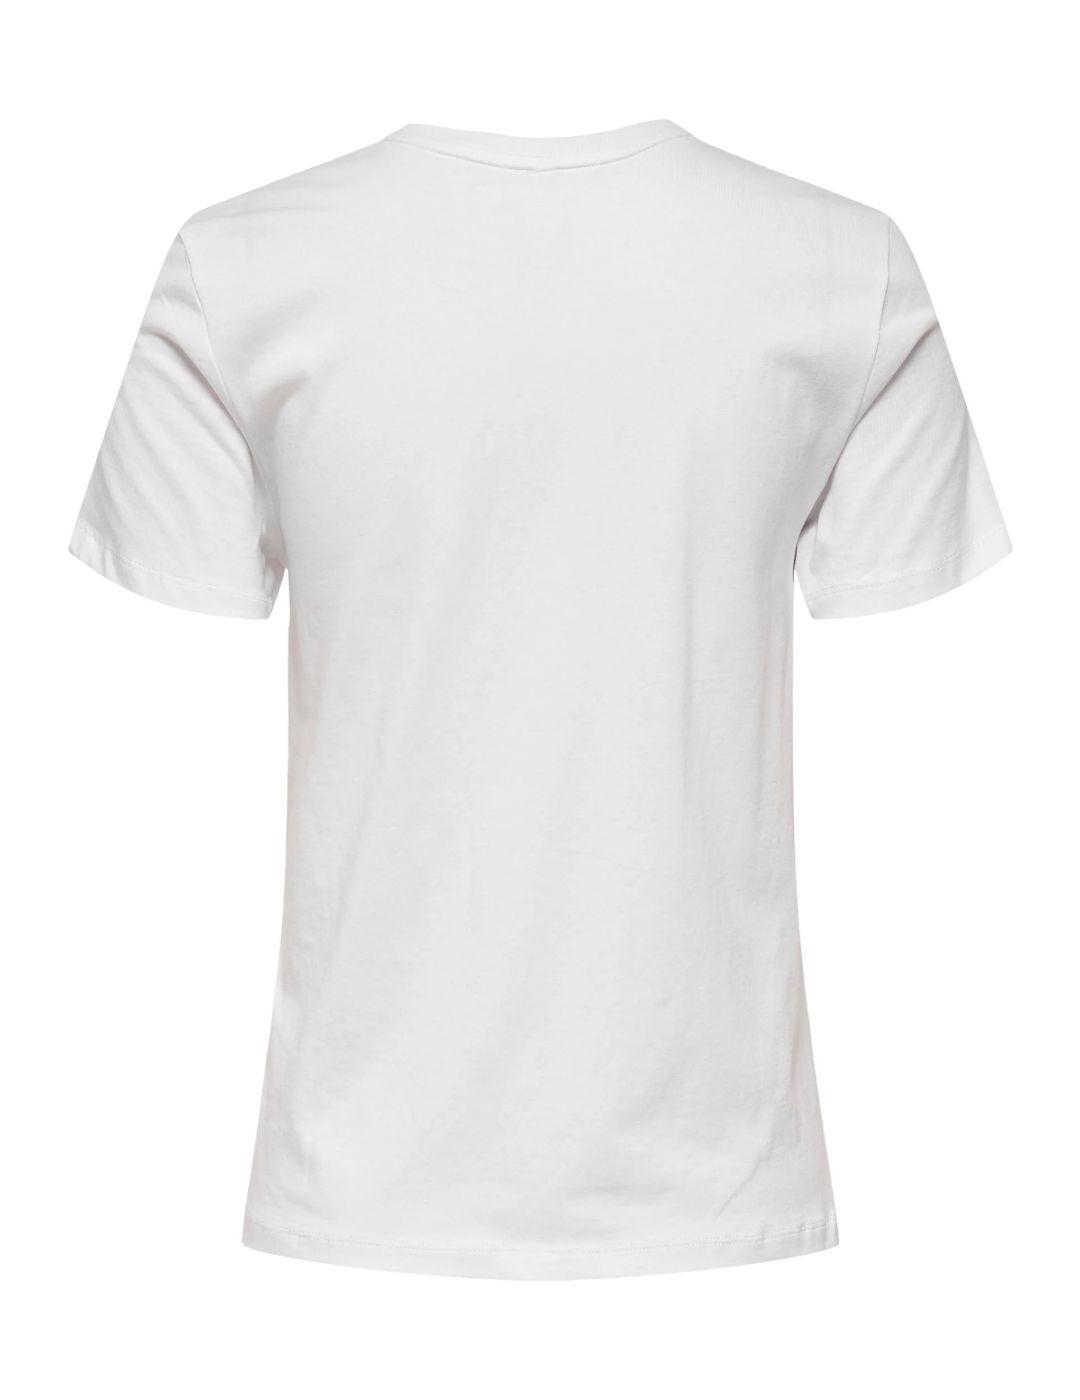 Camiseta Only café blanca para mujer-b